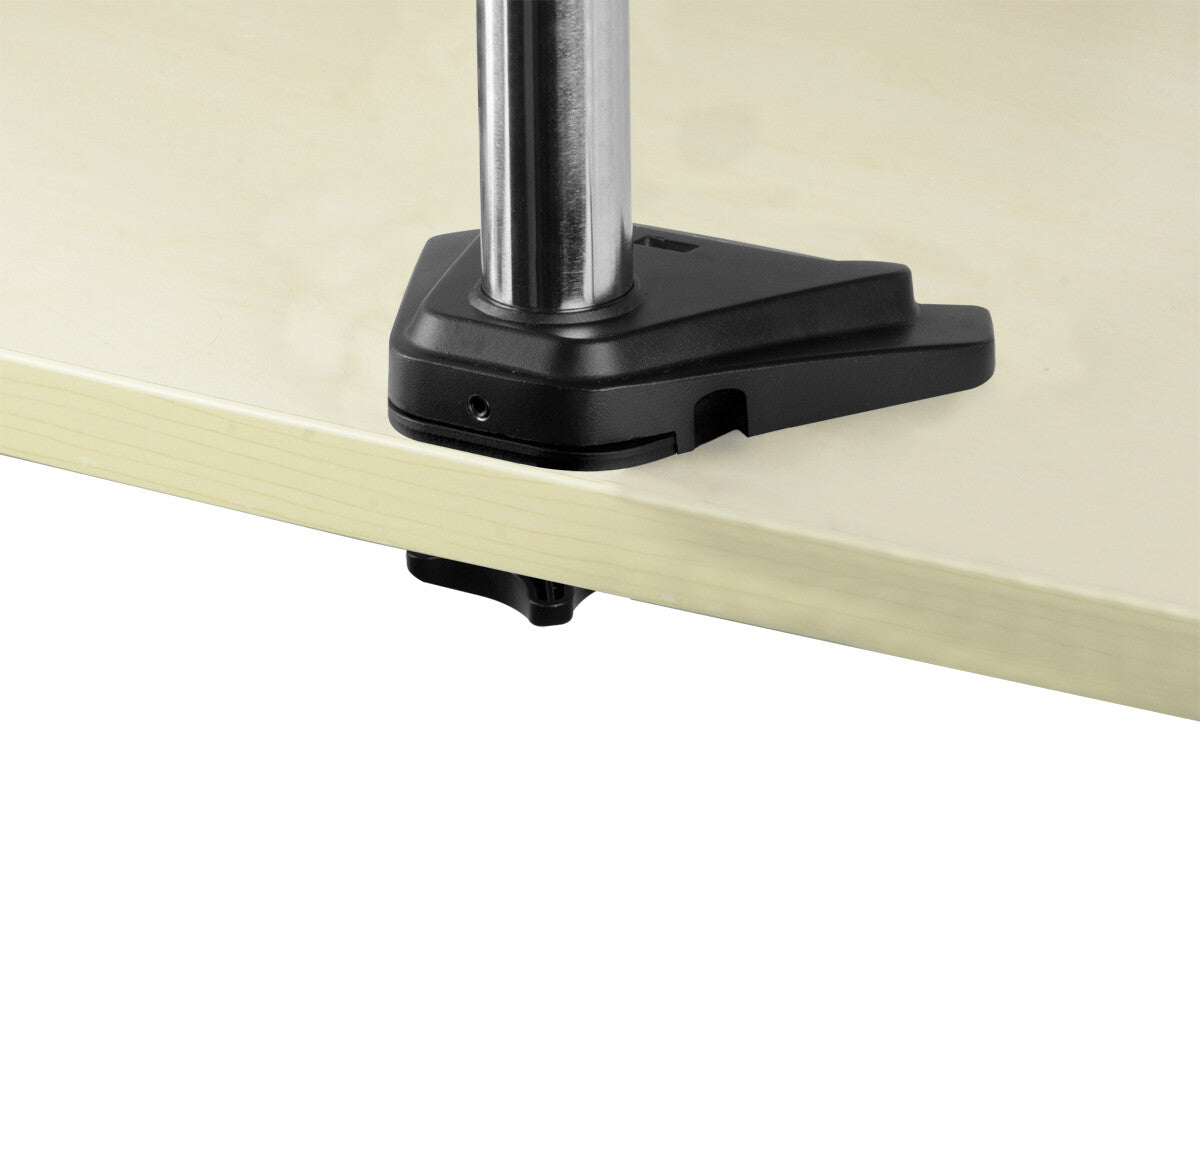 ARCTIC Z1 Pro (Gen 3) - Desk Mount Monitor Arm with USB 3.0 Hub